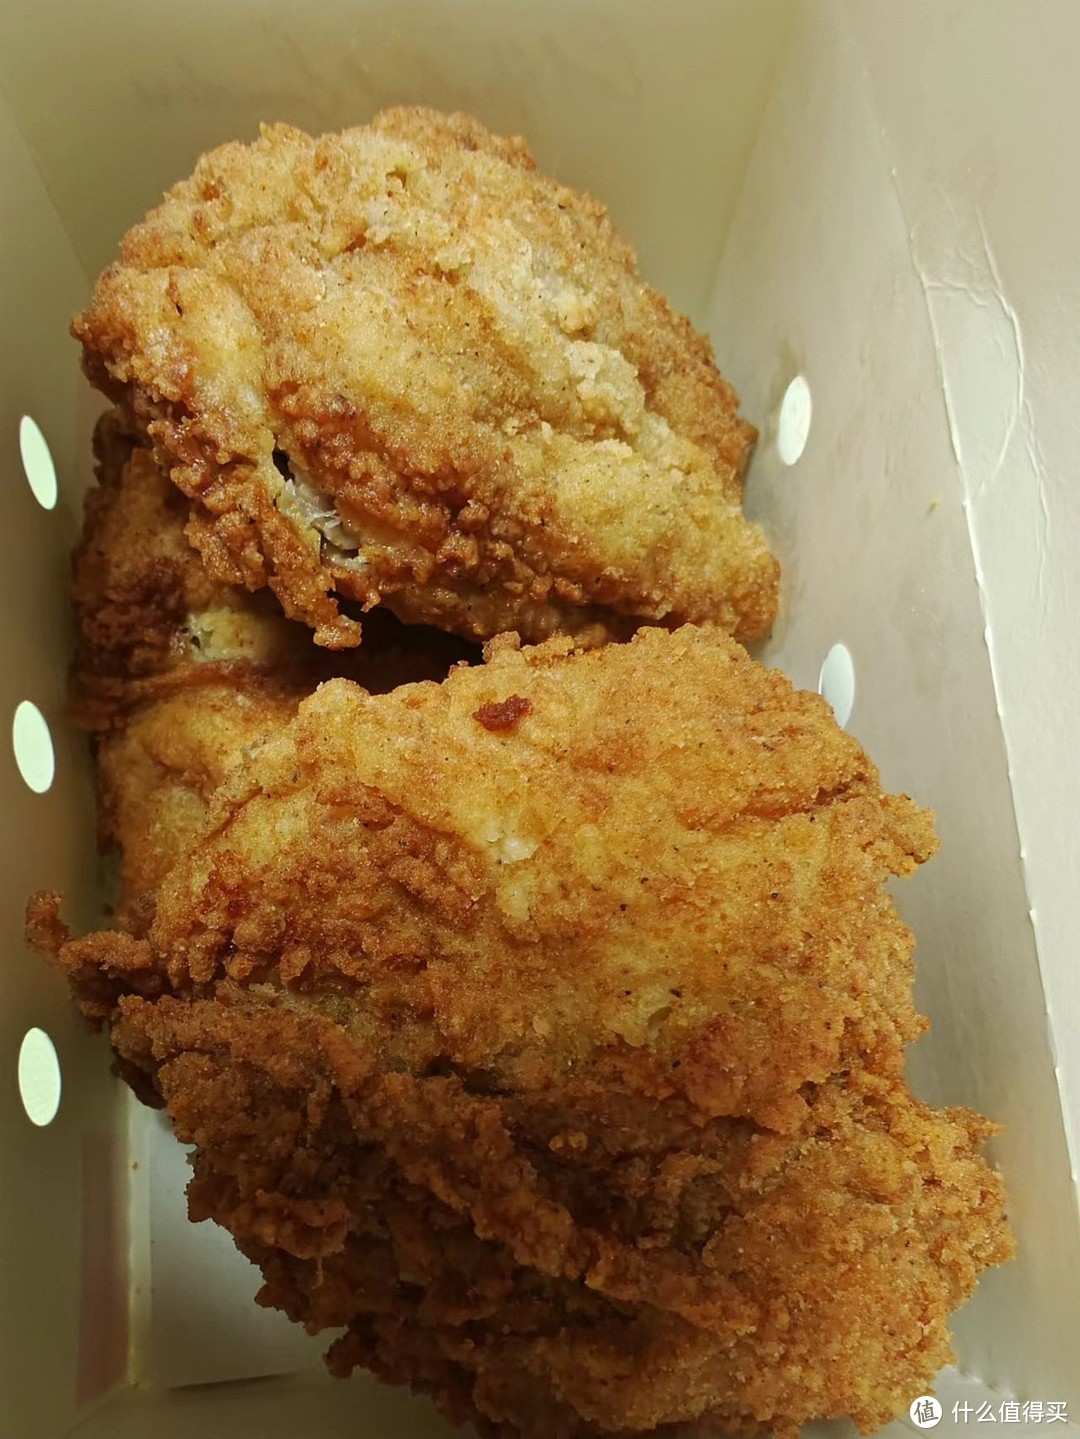 KFC黄金鸡块新品是不是用植物做的呢？